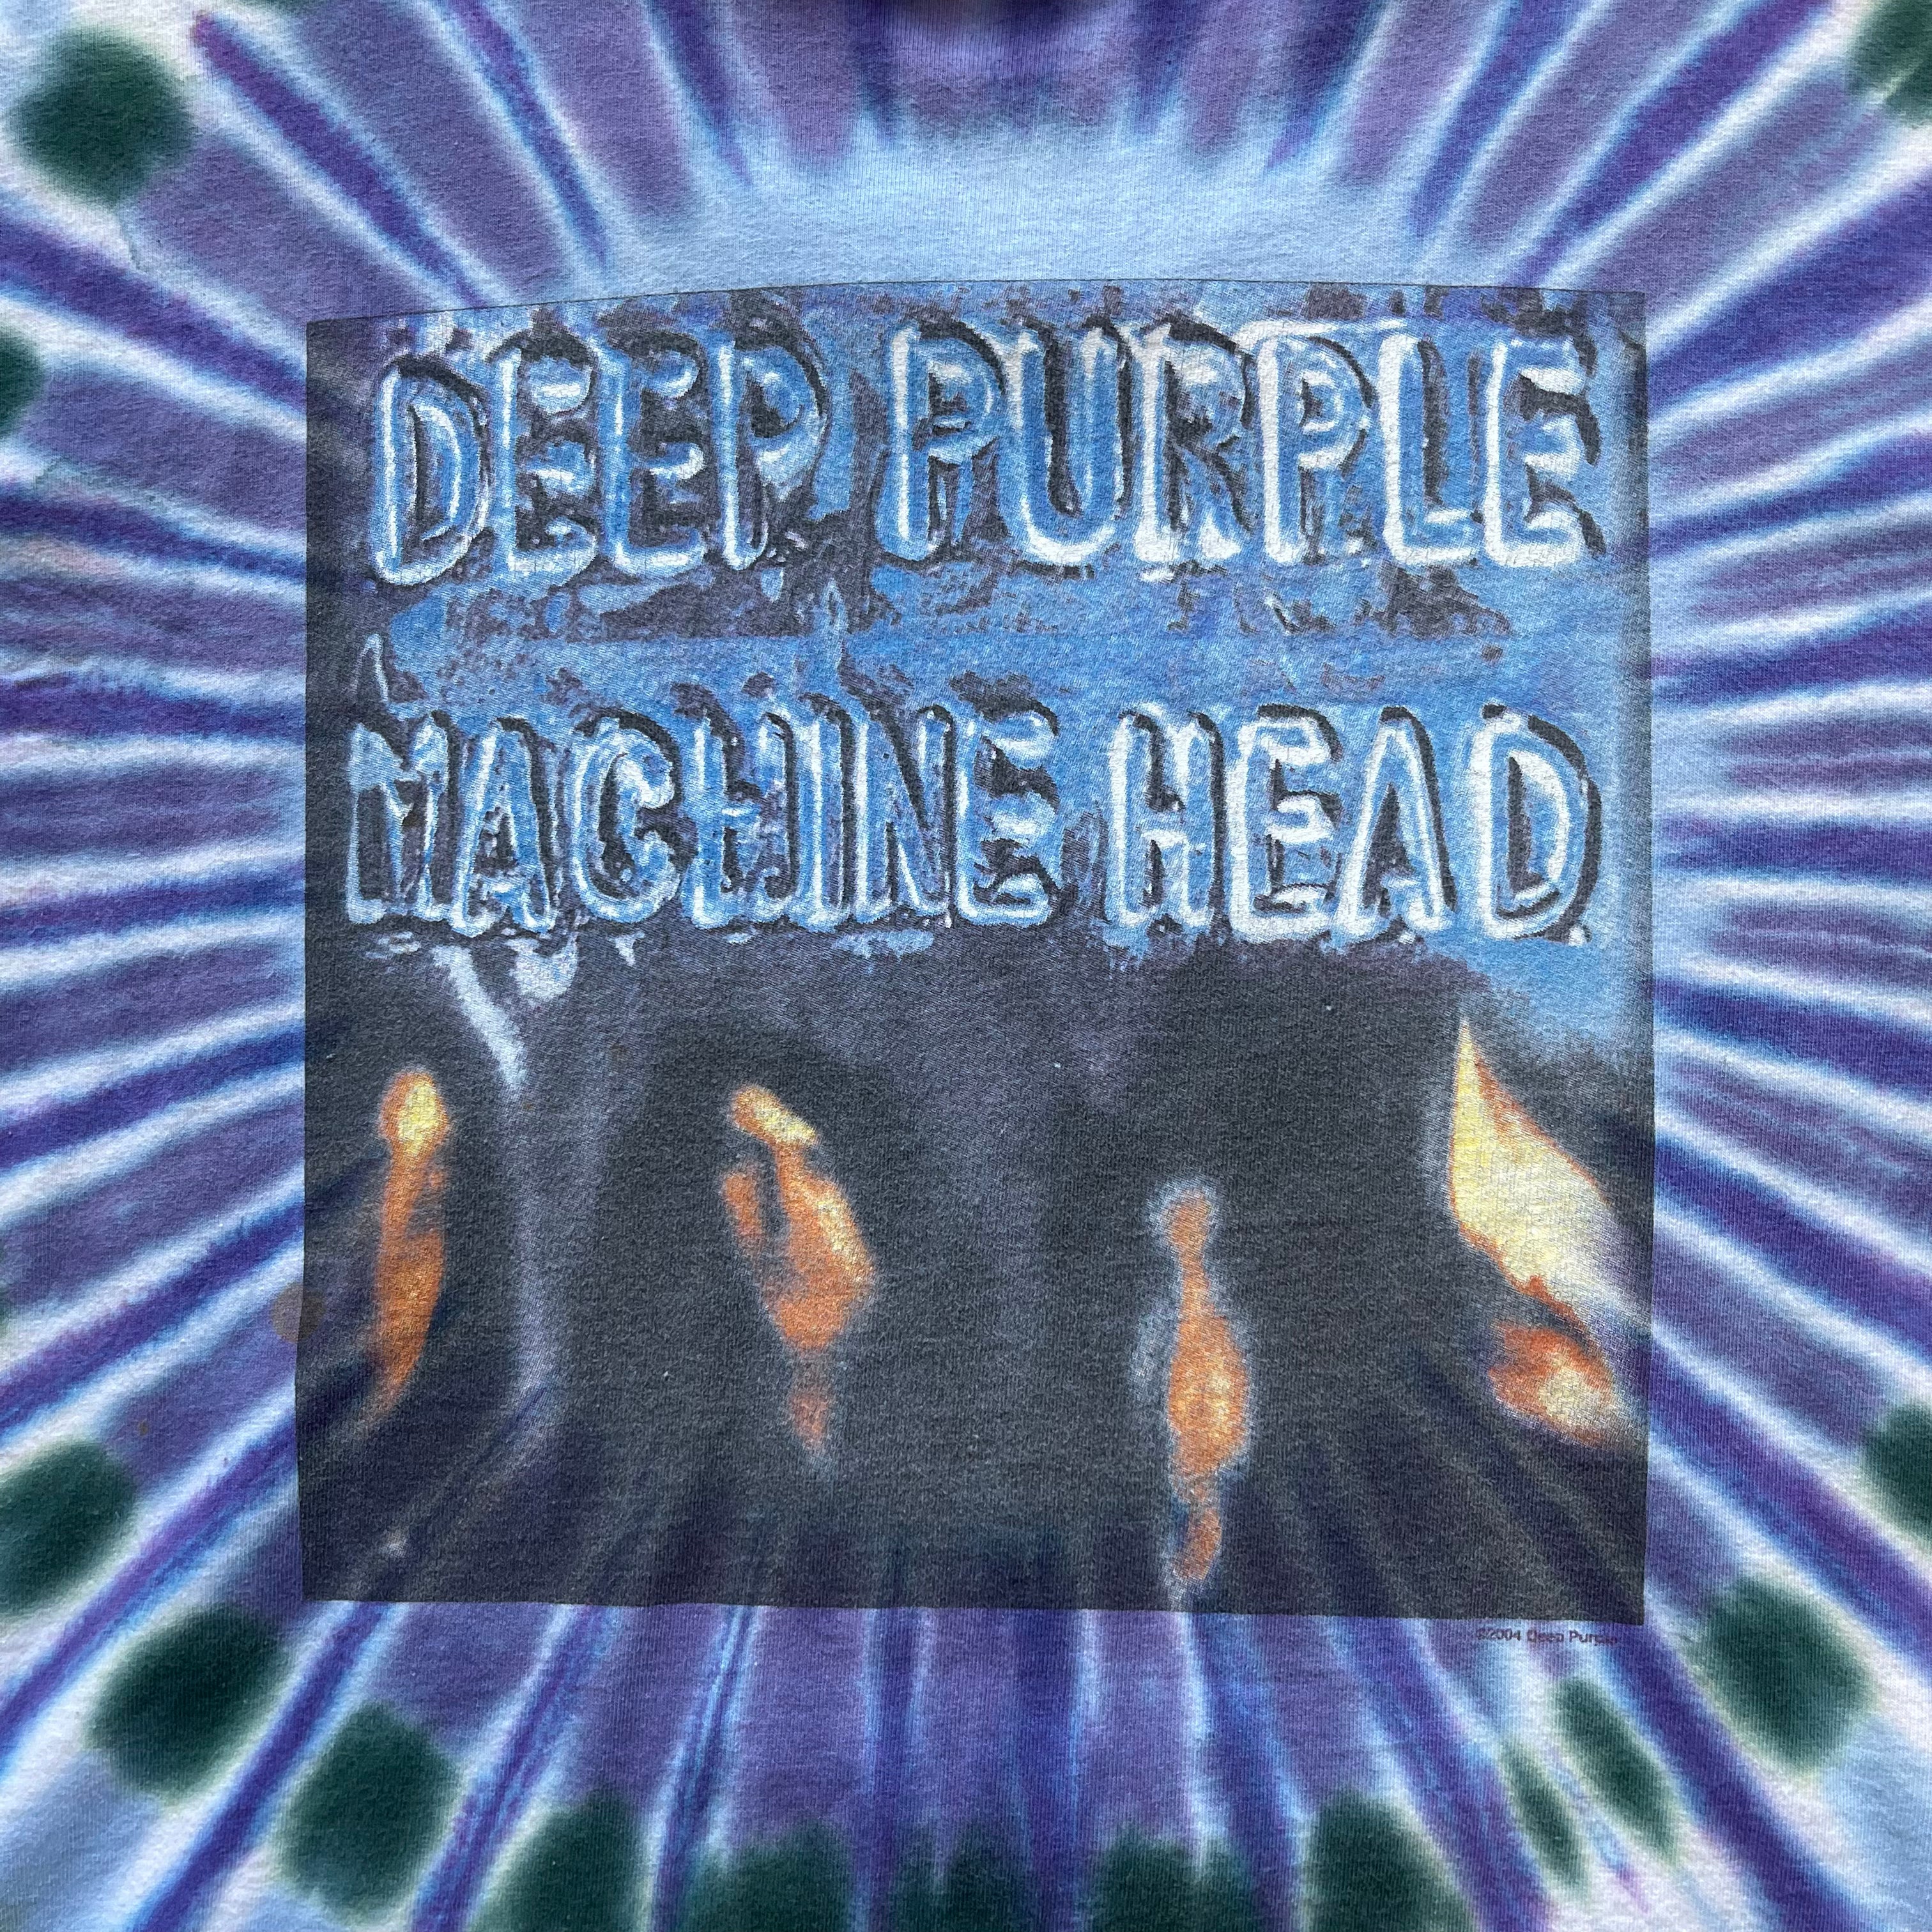 Deep Purple Machine head T-shirt